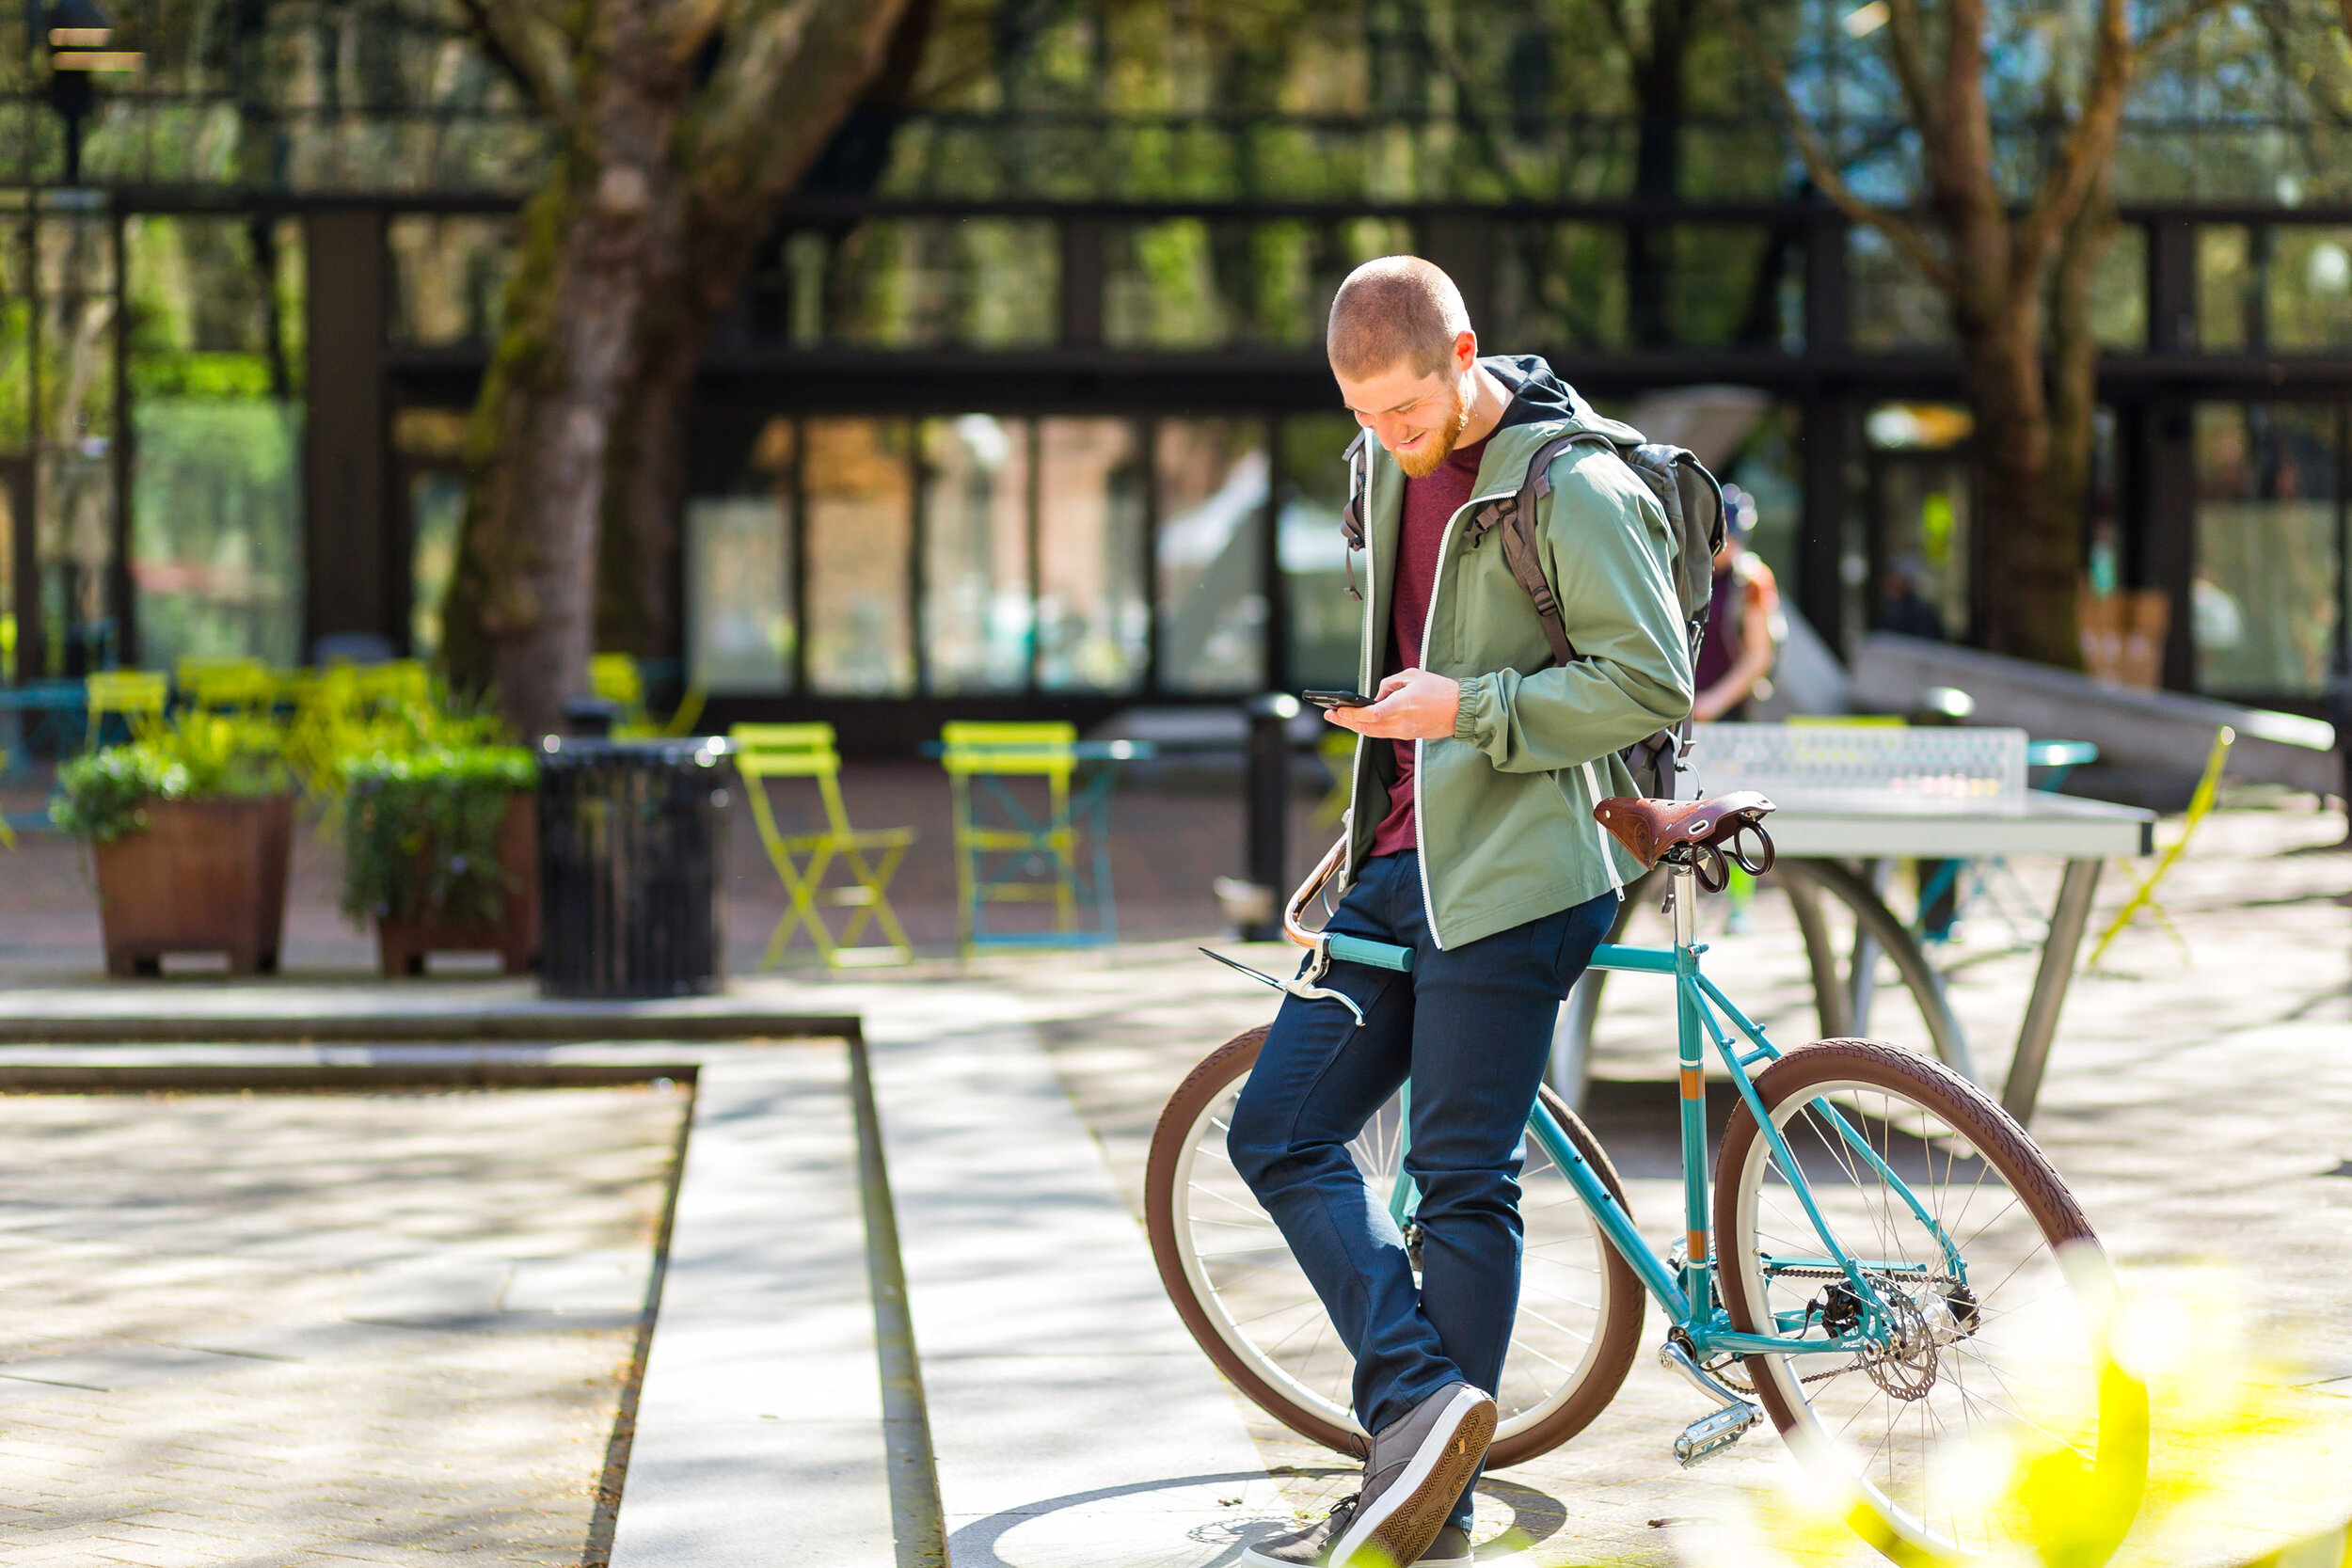  Lifestyle: Urban lifestyle and biking in Pioneer Square, downtown Seattle, Washington 